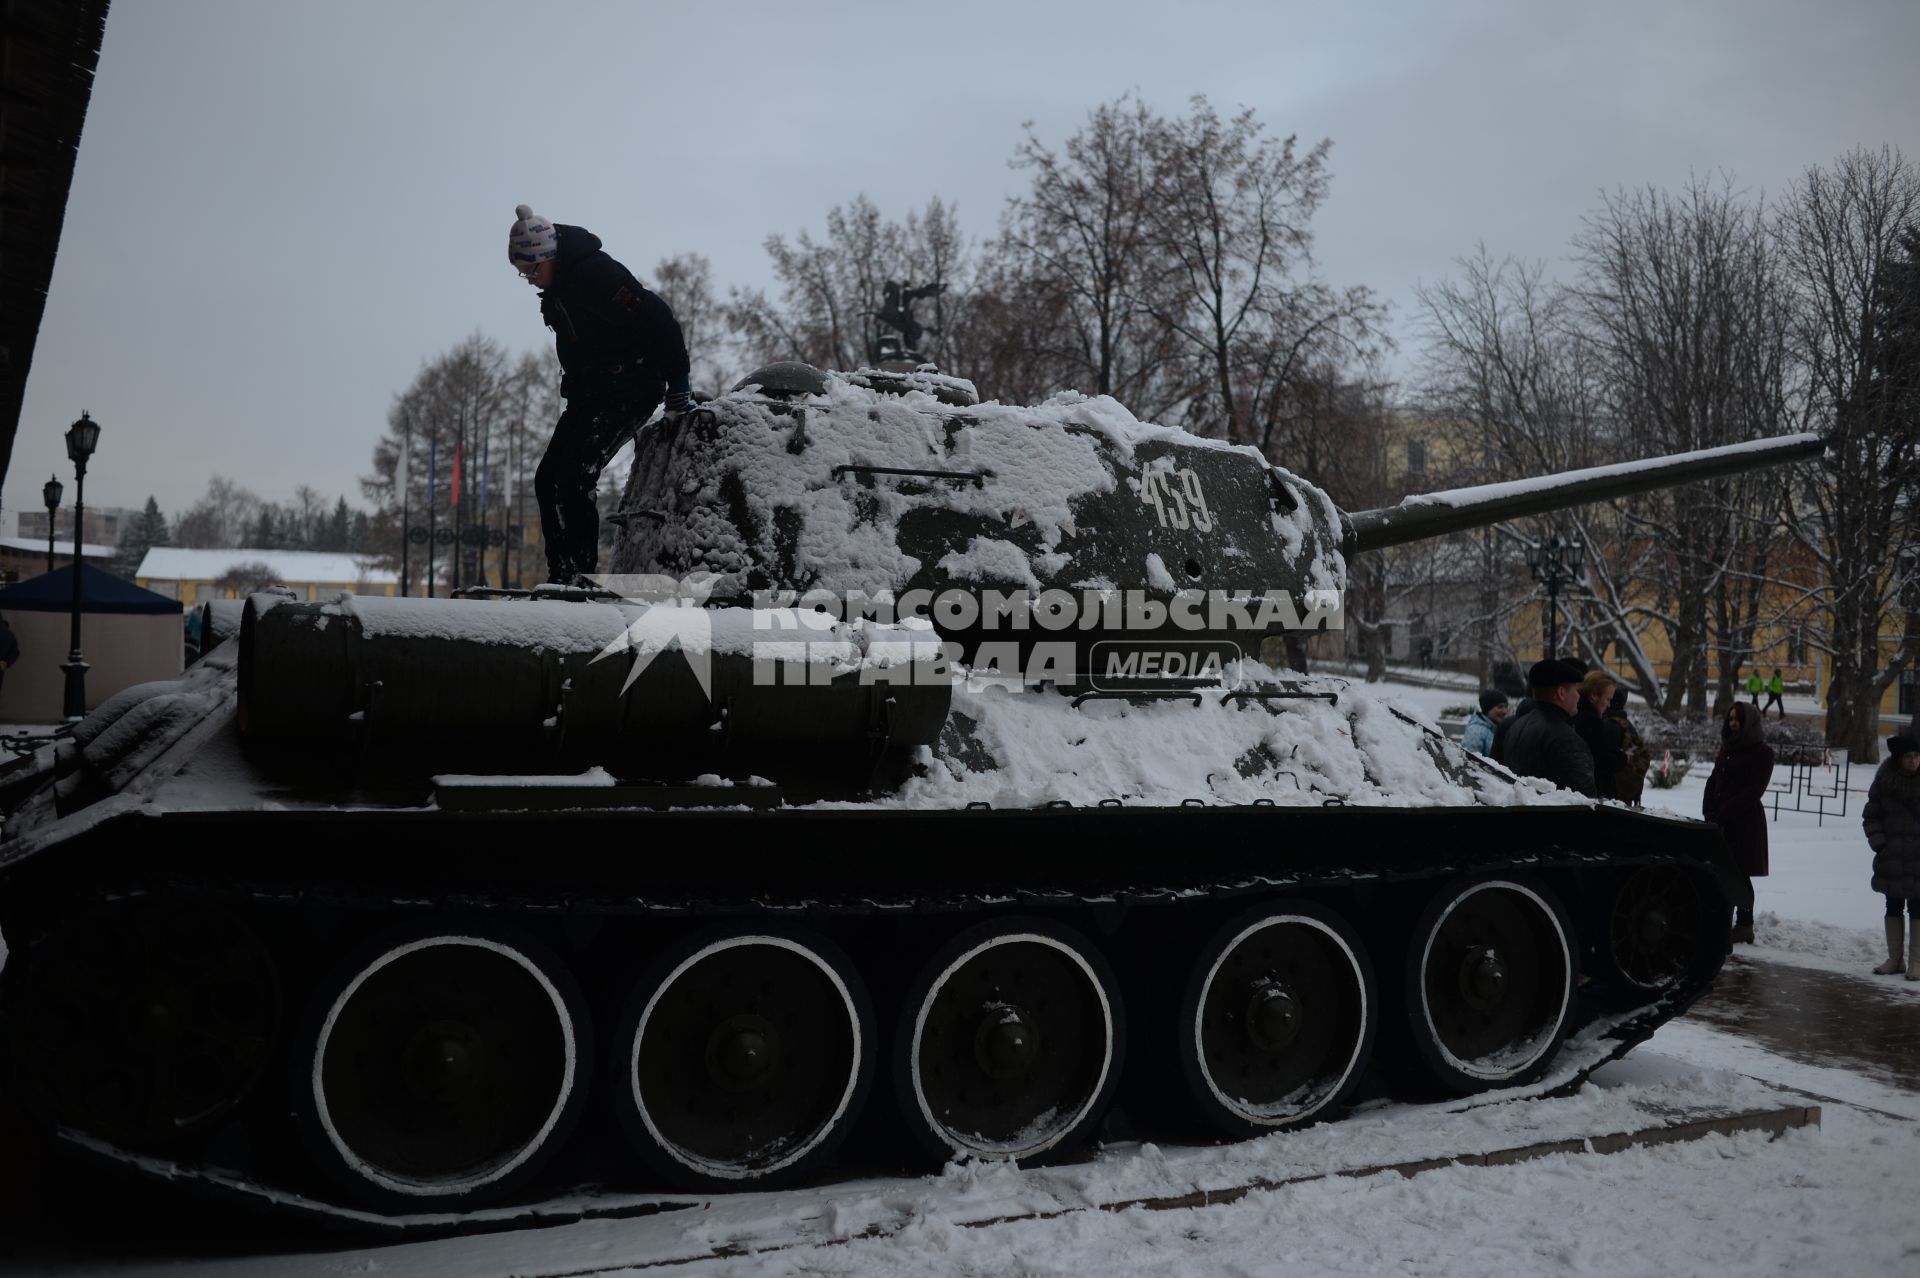 Нижний Новгород. Памятник танку Т-34-85 на территории кремля.